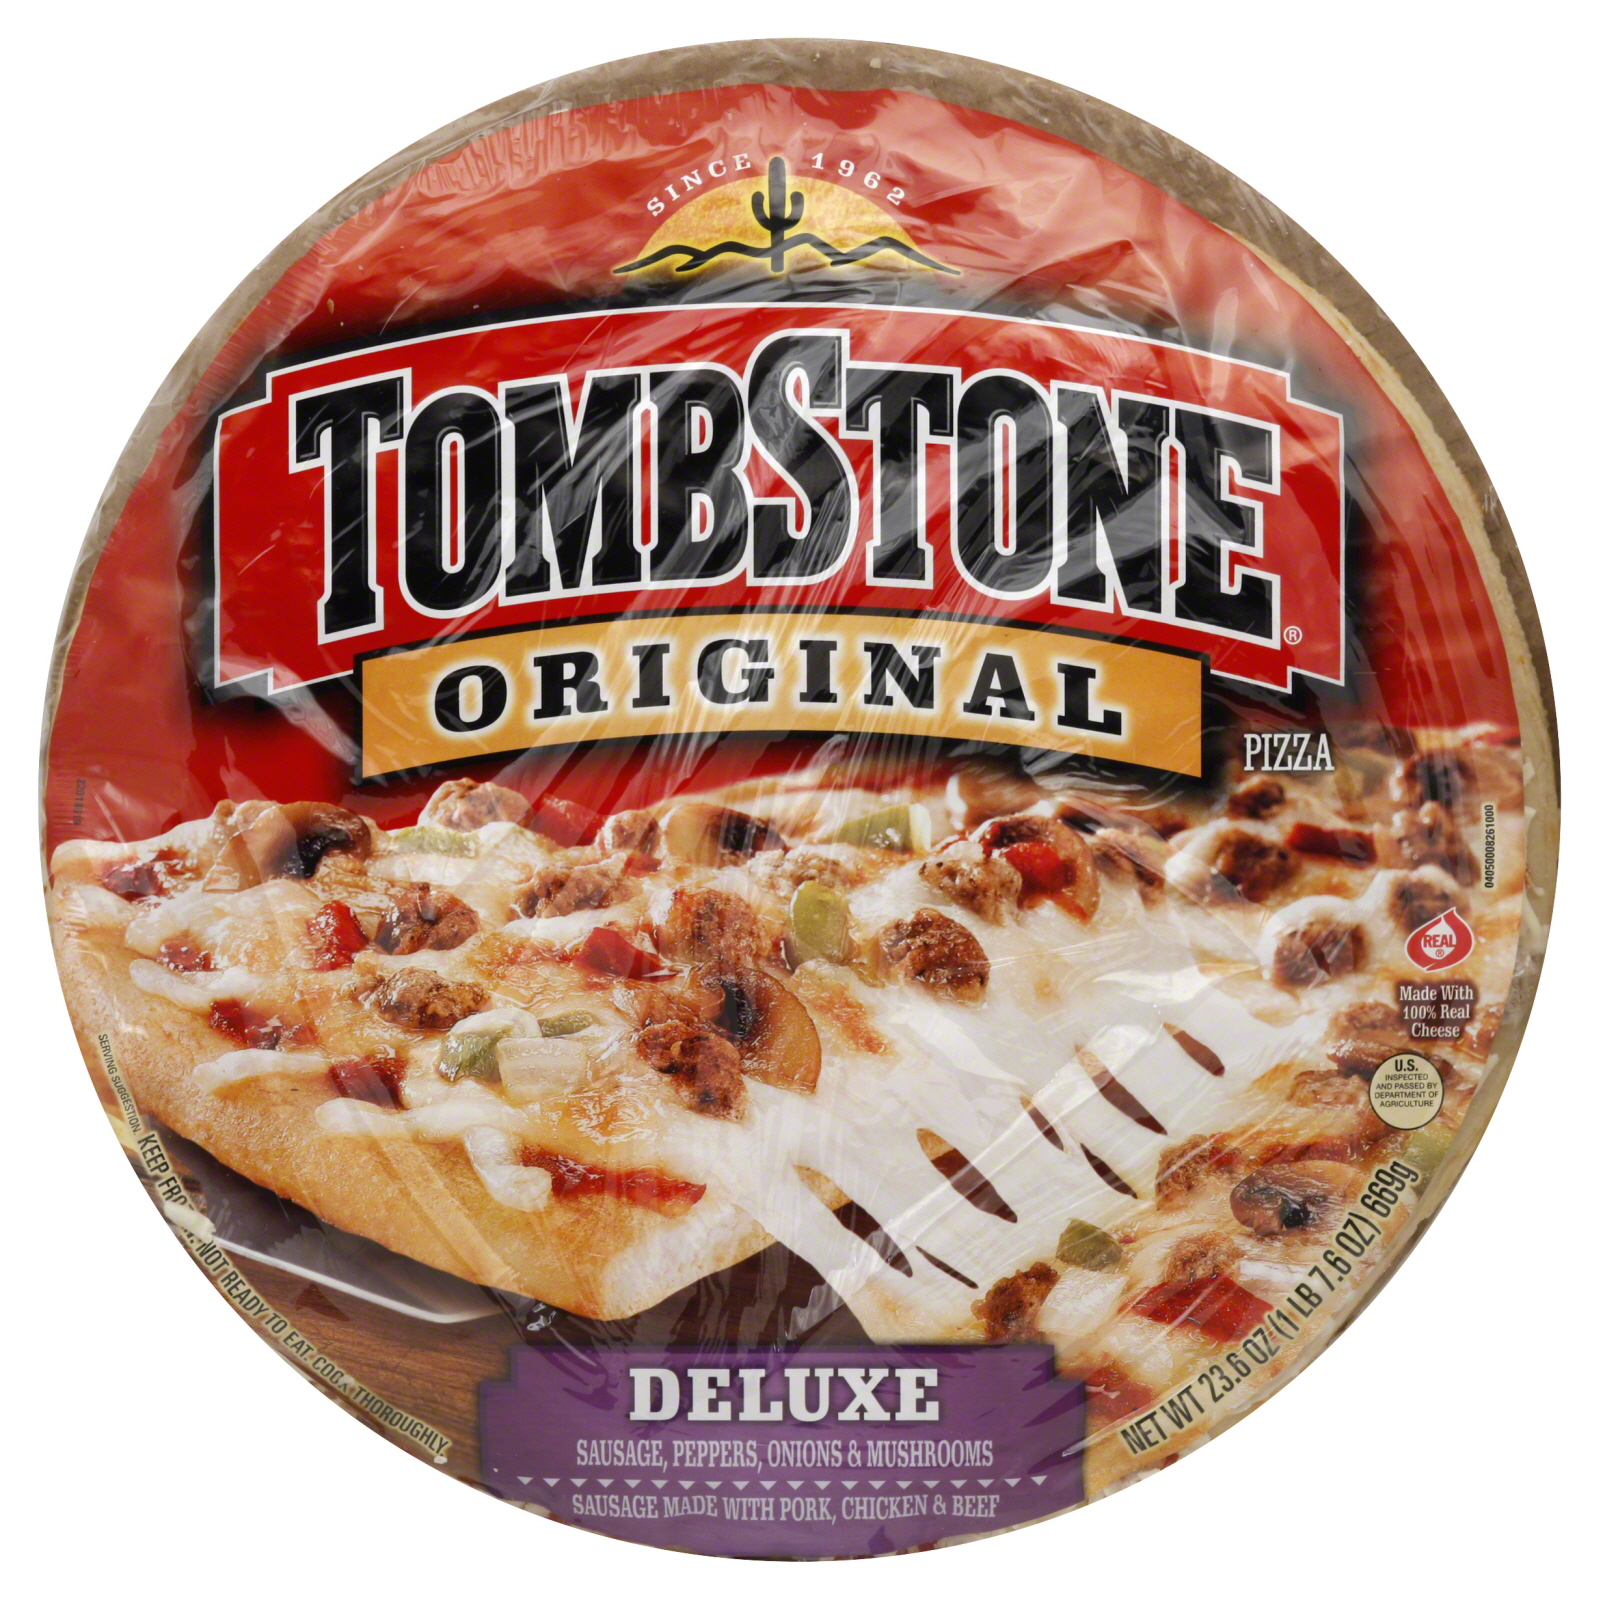 Tombstone Original Pizza, Deluxe, 23.6 oz (1 lb 7.6 oz) 669 g